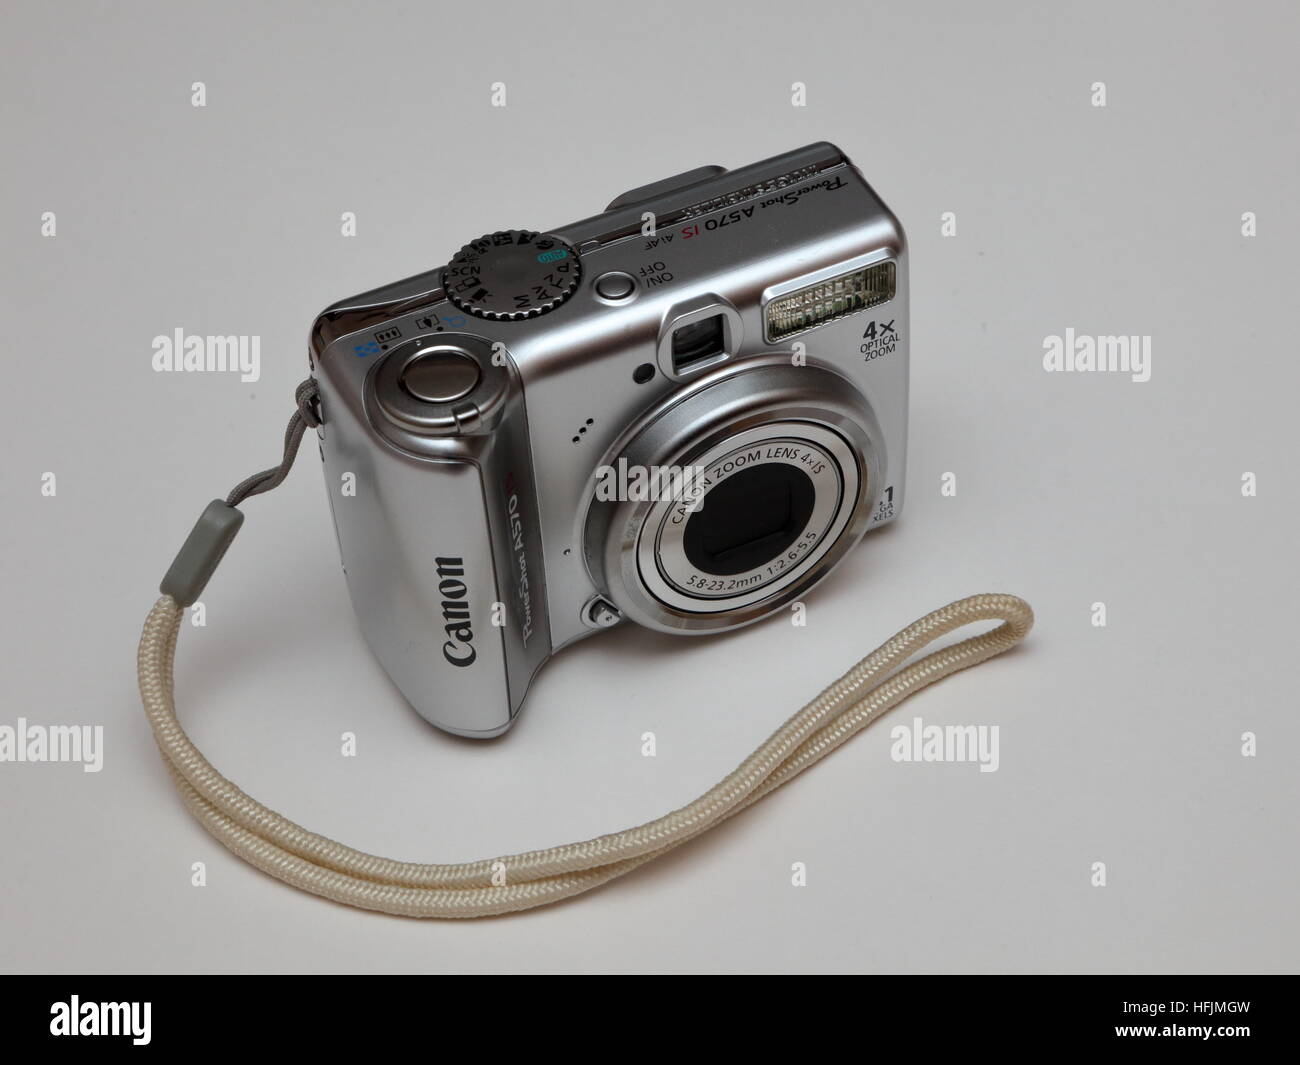 Canon PowerShot A570 - 7.1 Mpx Digital compact camera Stock Photo